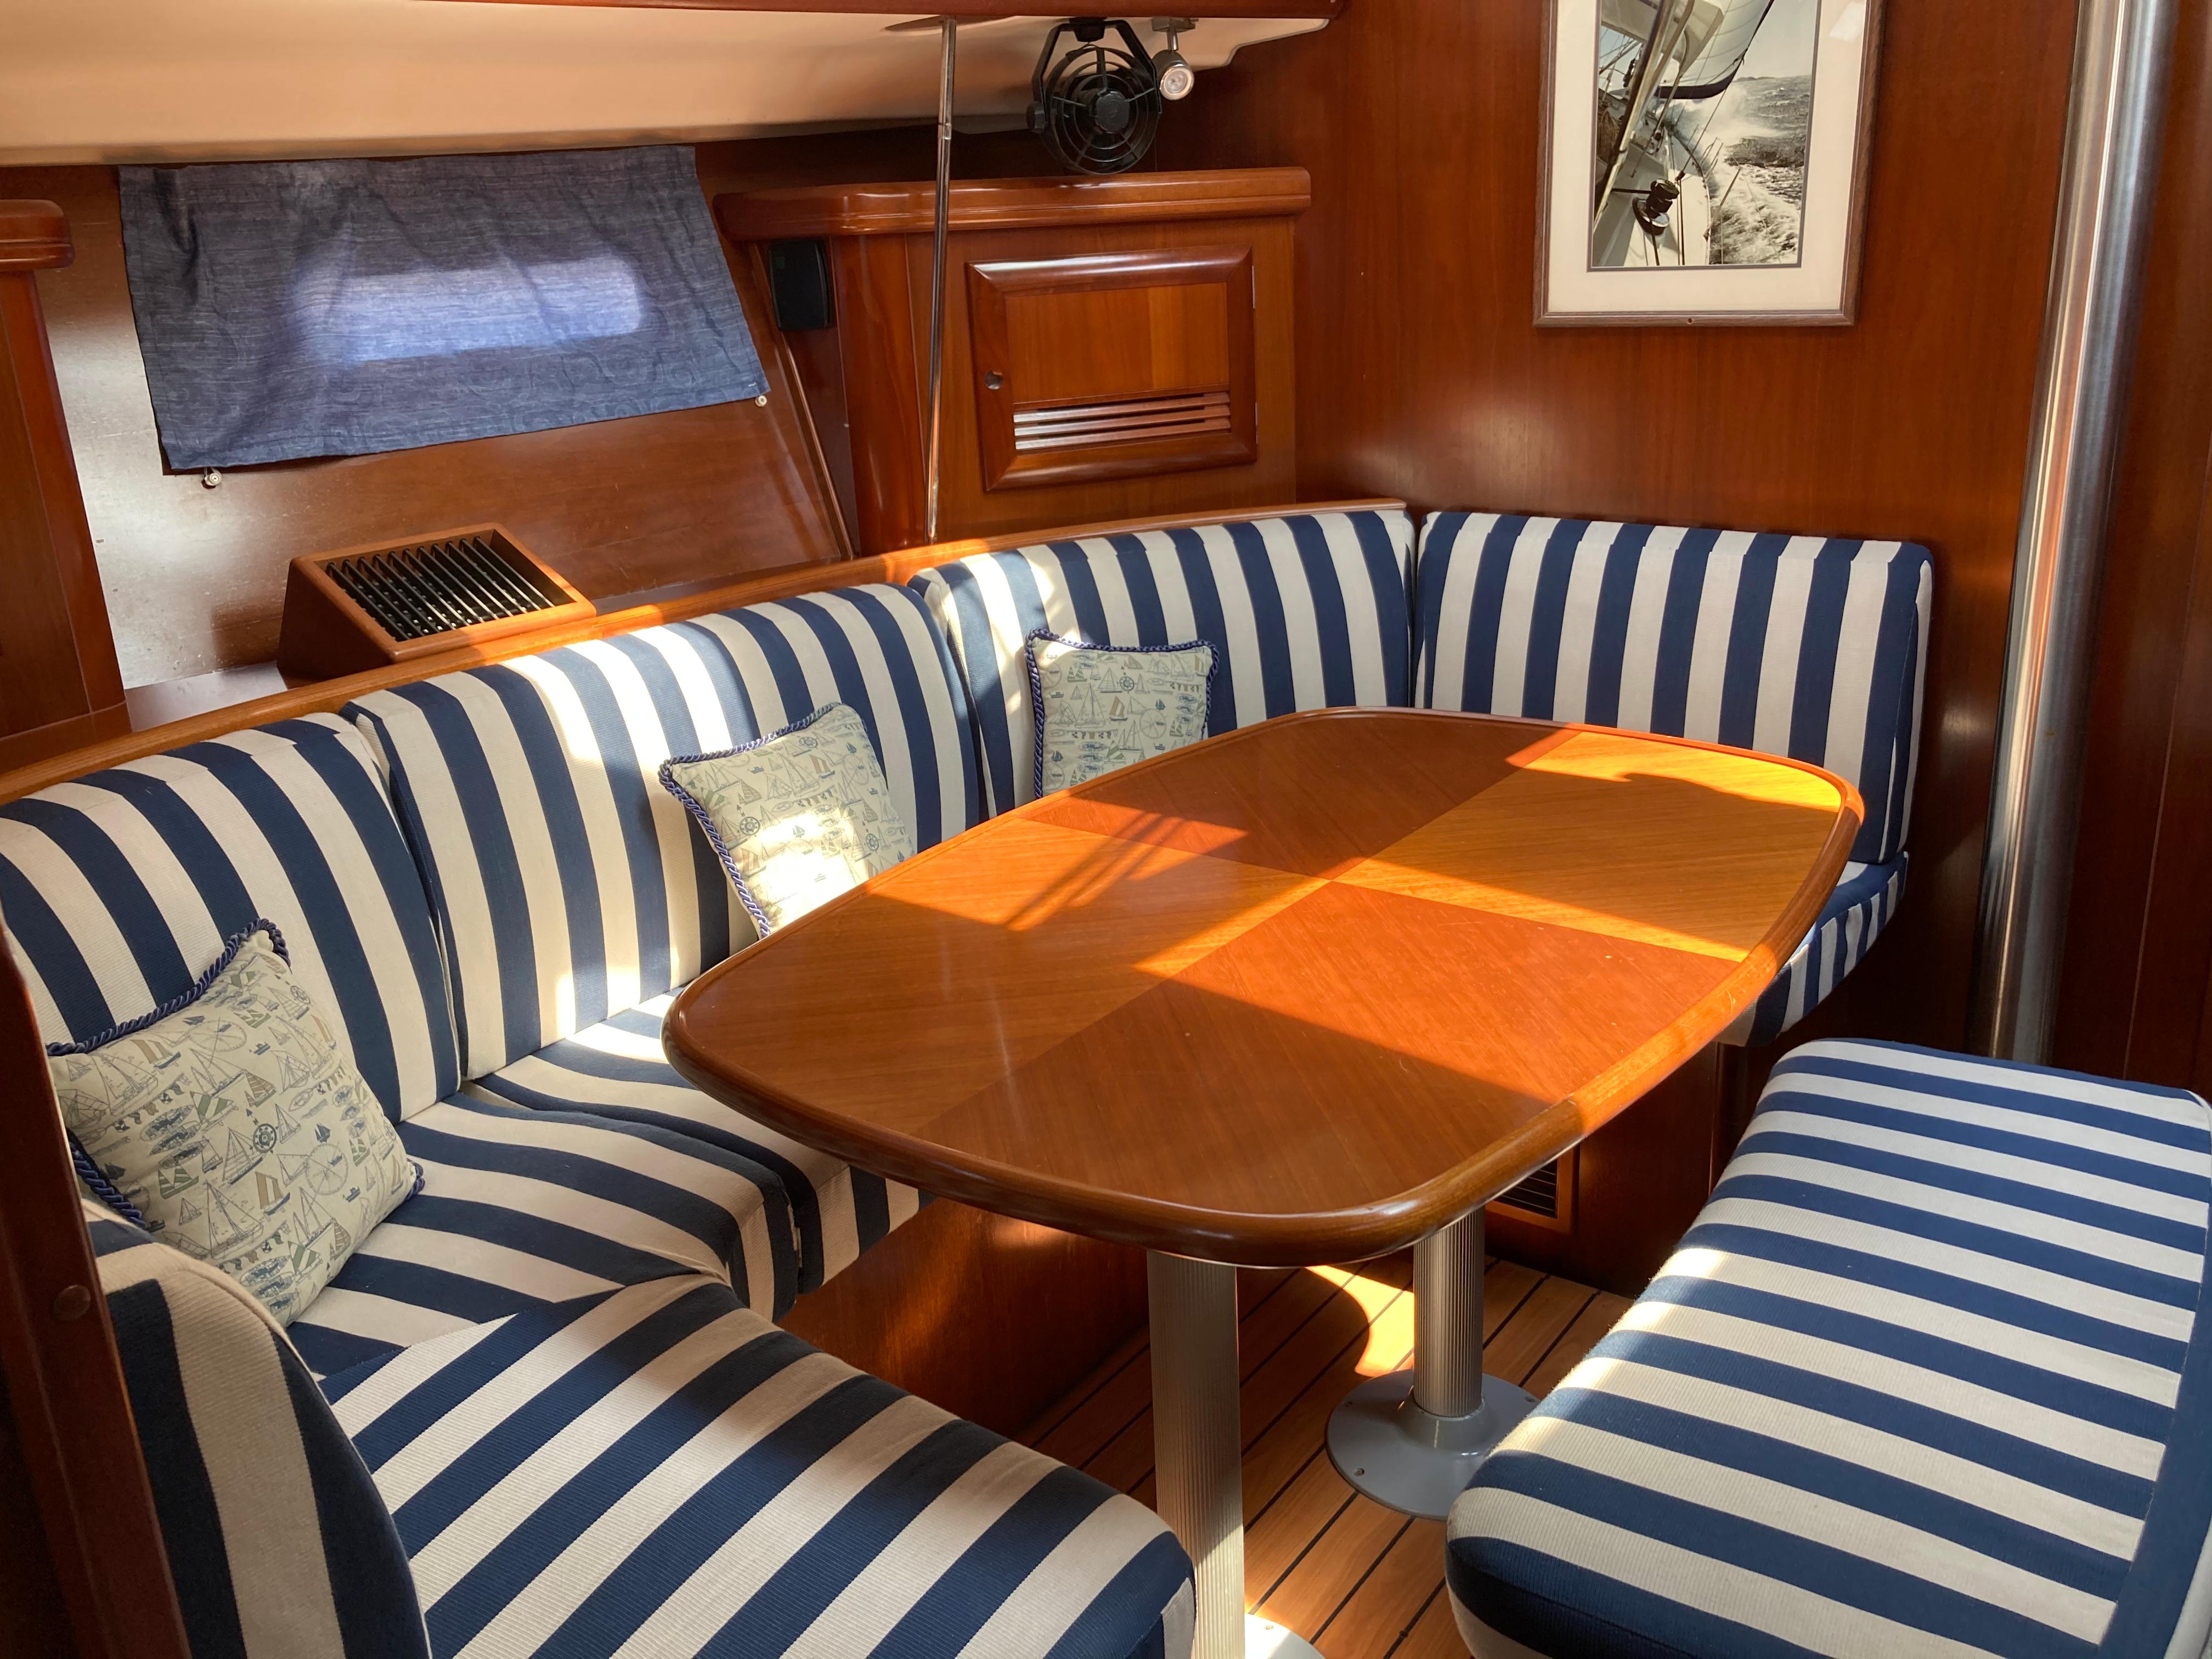 2003 Beneteau 393 For Sale | YaZu Yachting | Deltaville